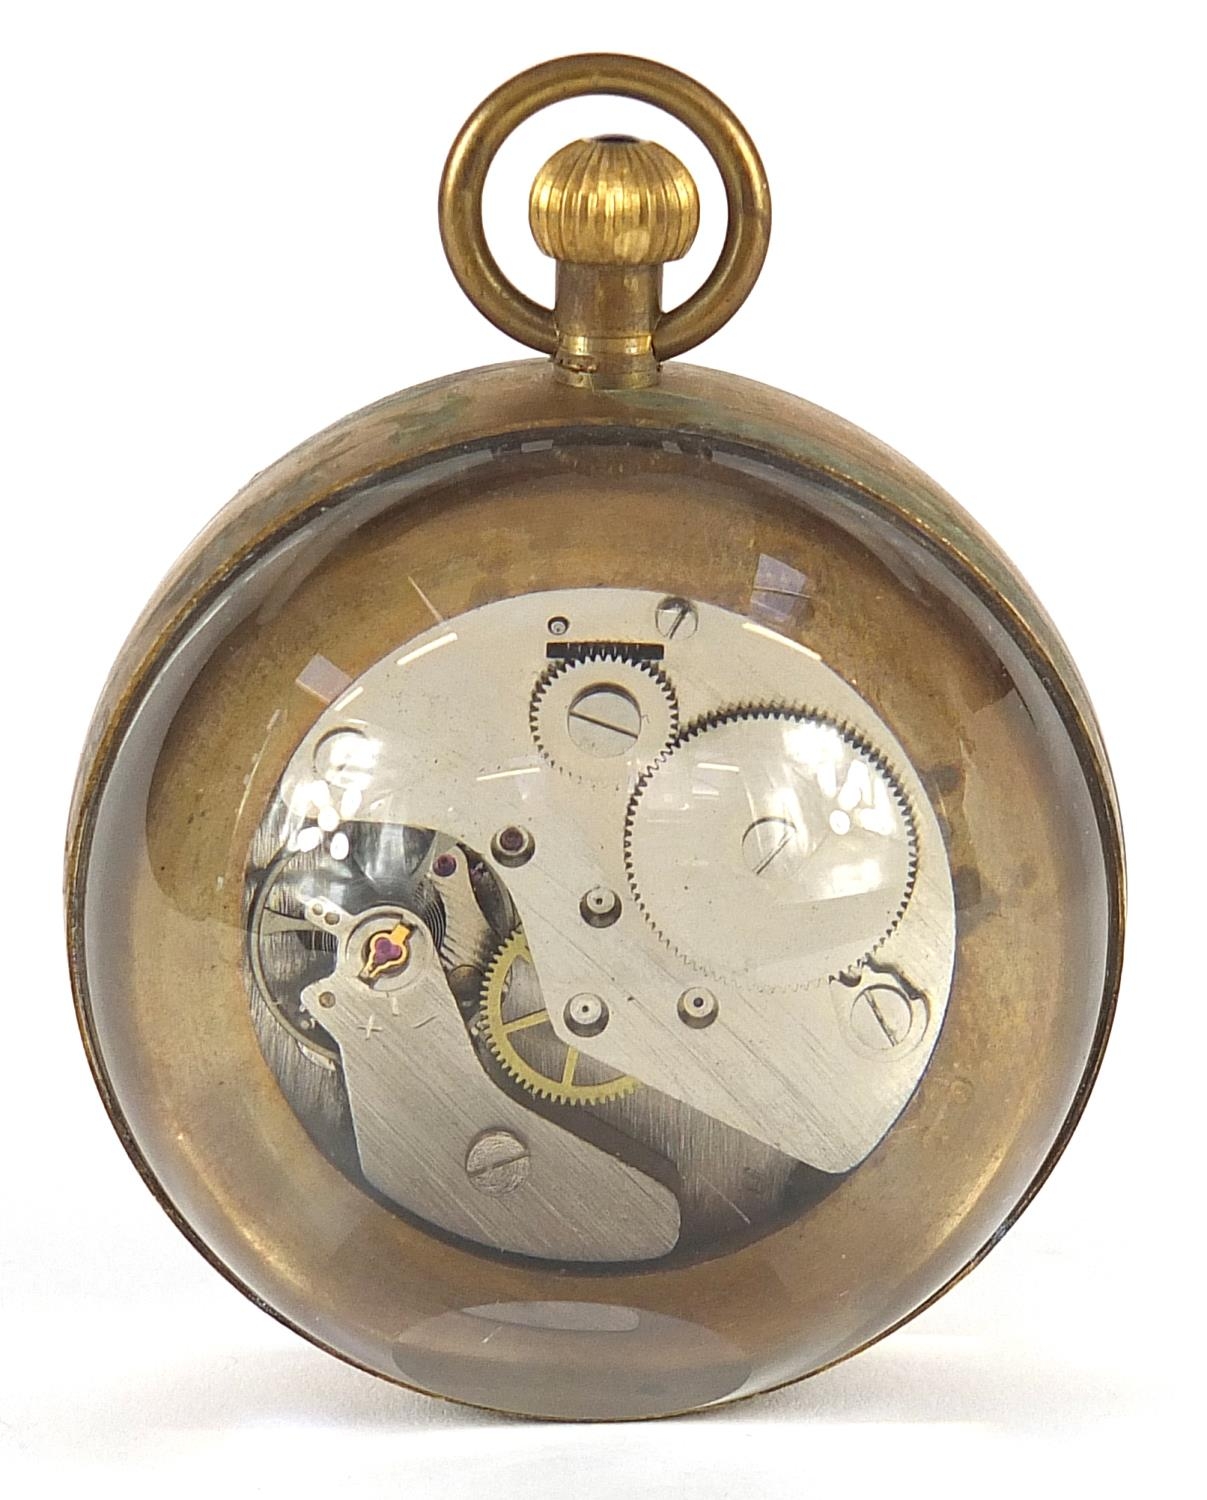 Globular glass and brass desk clock, 6cm in diameter - Image 2 of 3